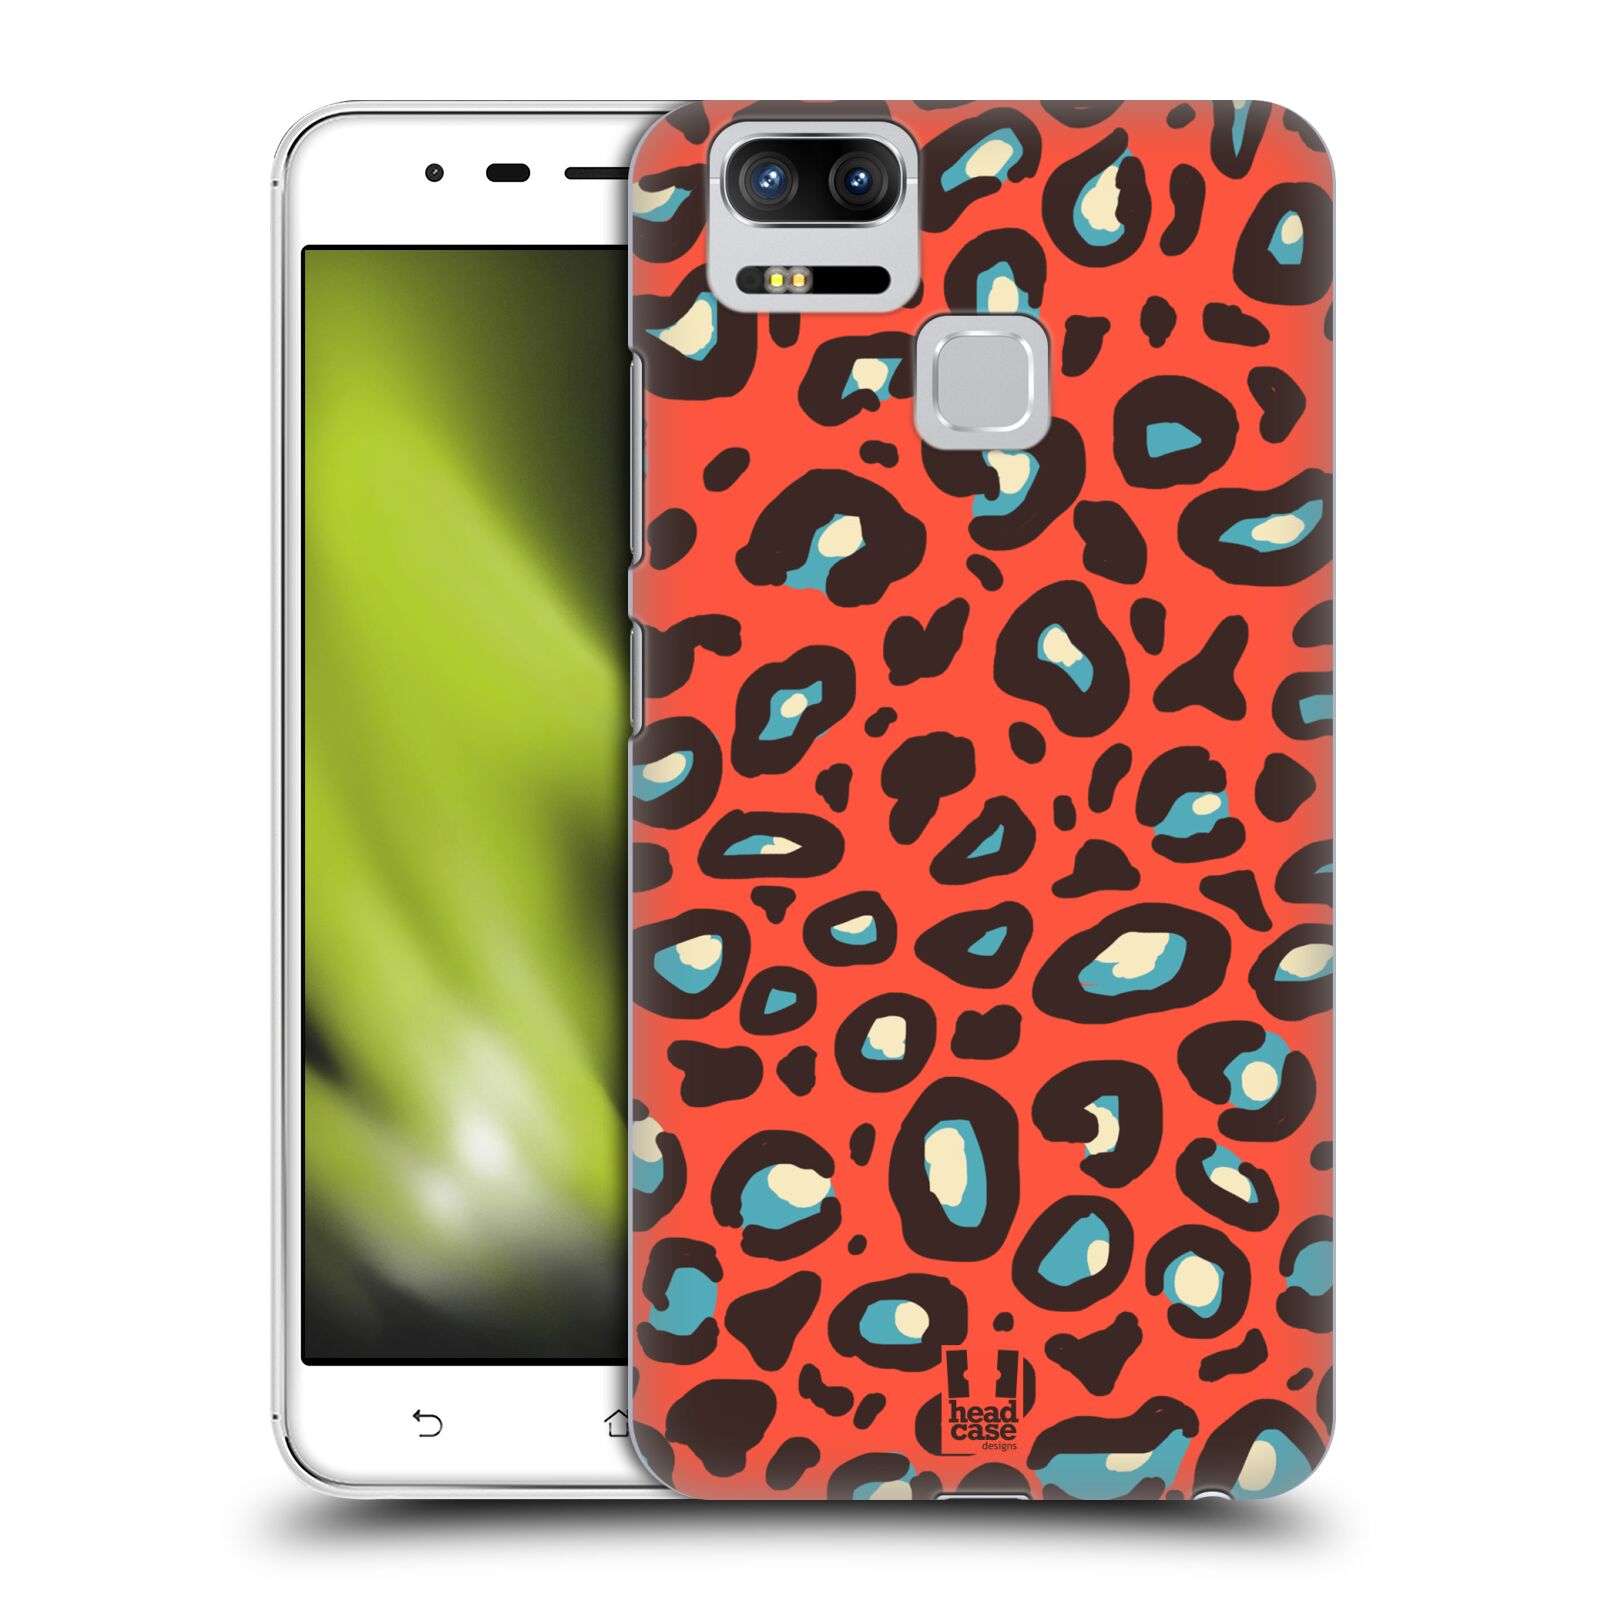 HEAD CASE plastový obal na mobil Asus Zenfone 3 Zoom ZE553KL vzor Divočina zvíře 2 oranžový leopard